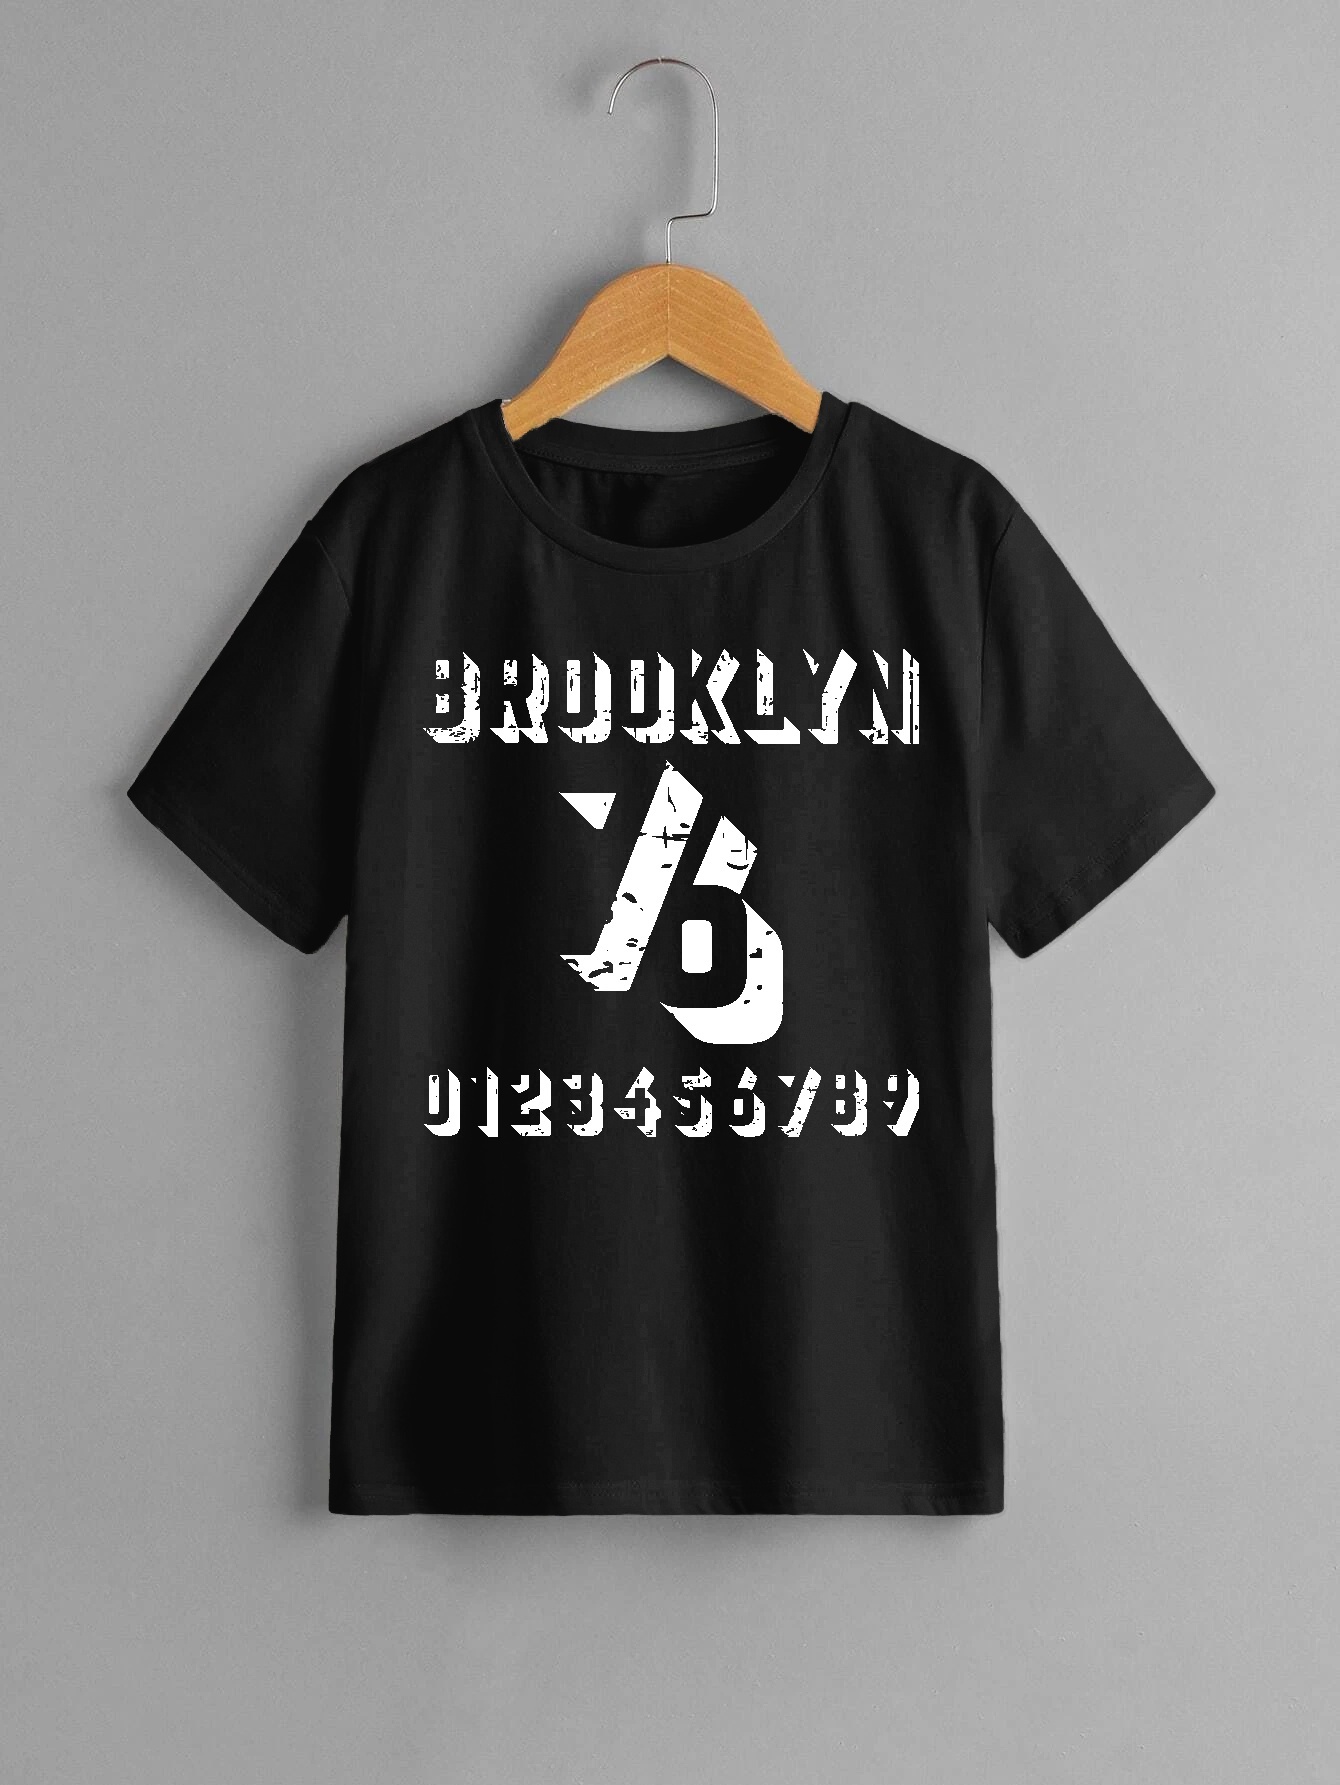 Dodgers Letter Print Boys Creative T Shirt Casual Lightweight